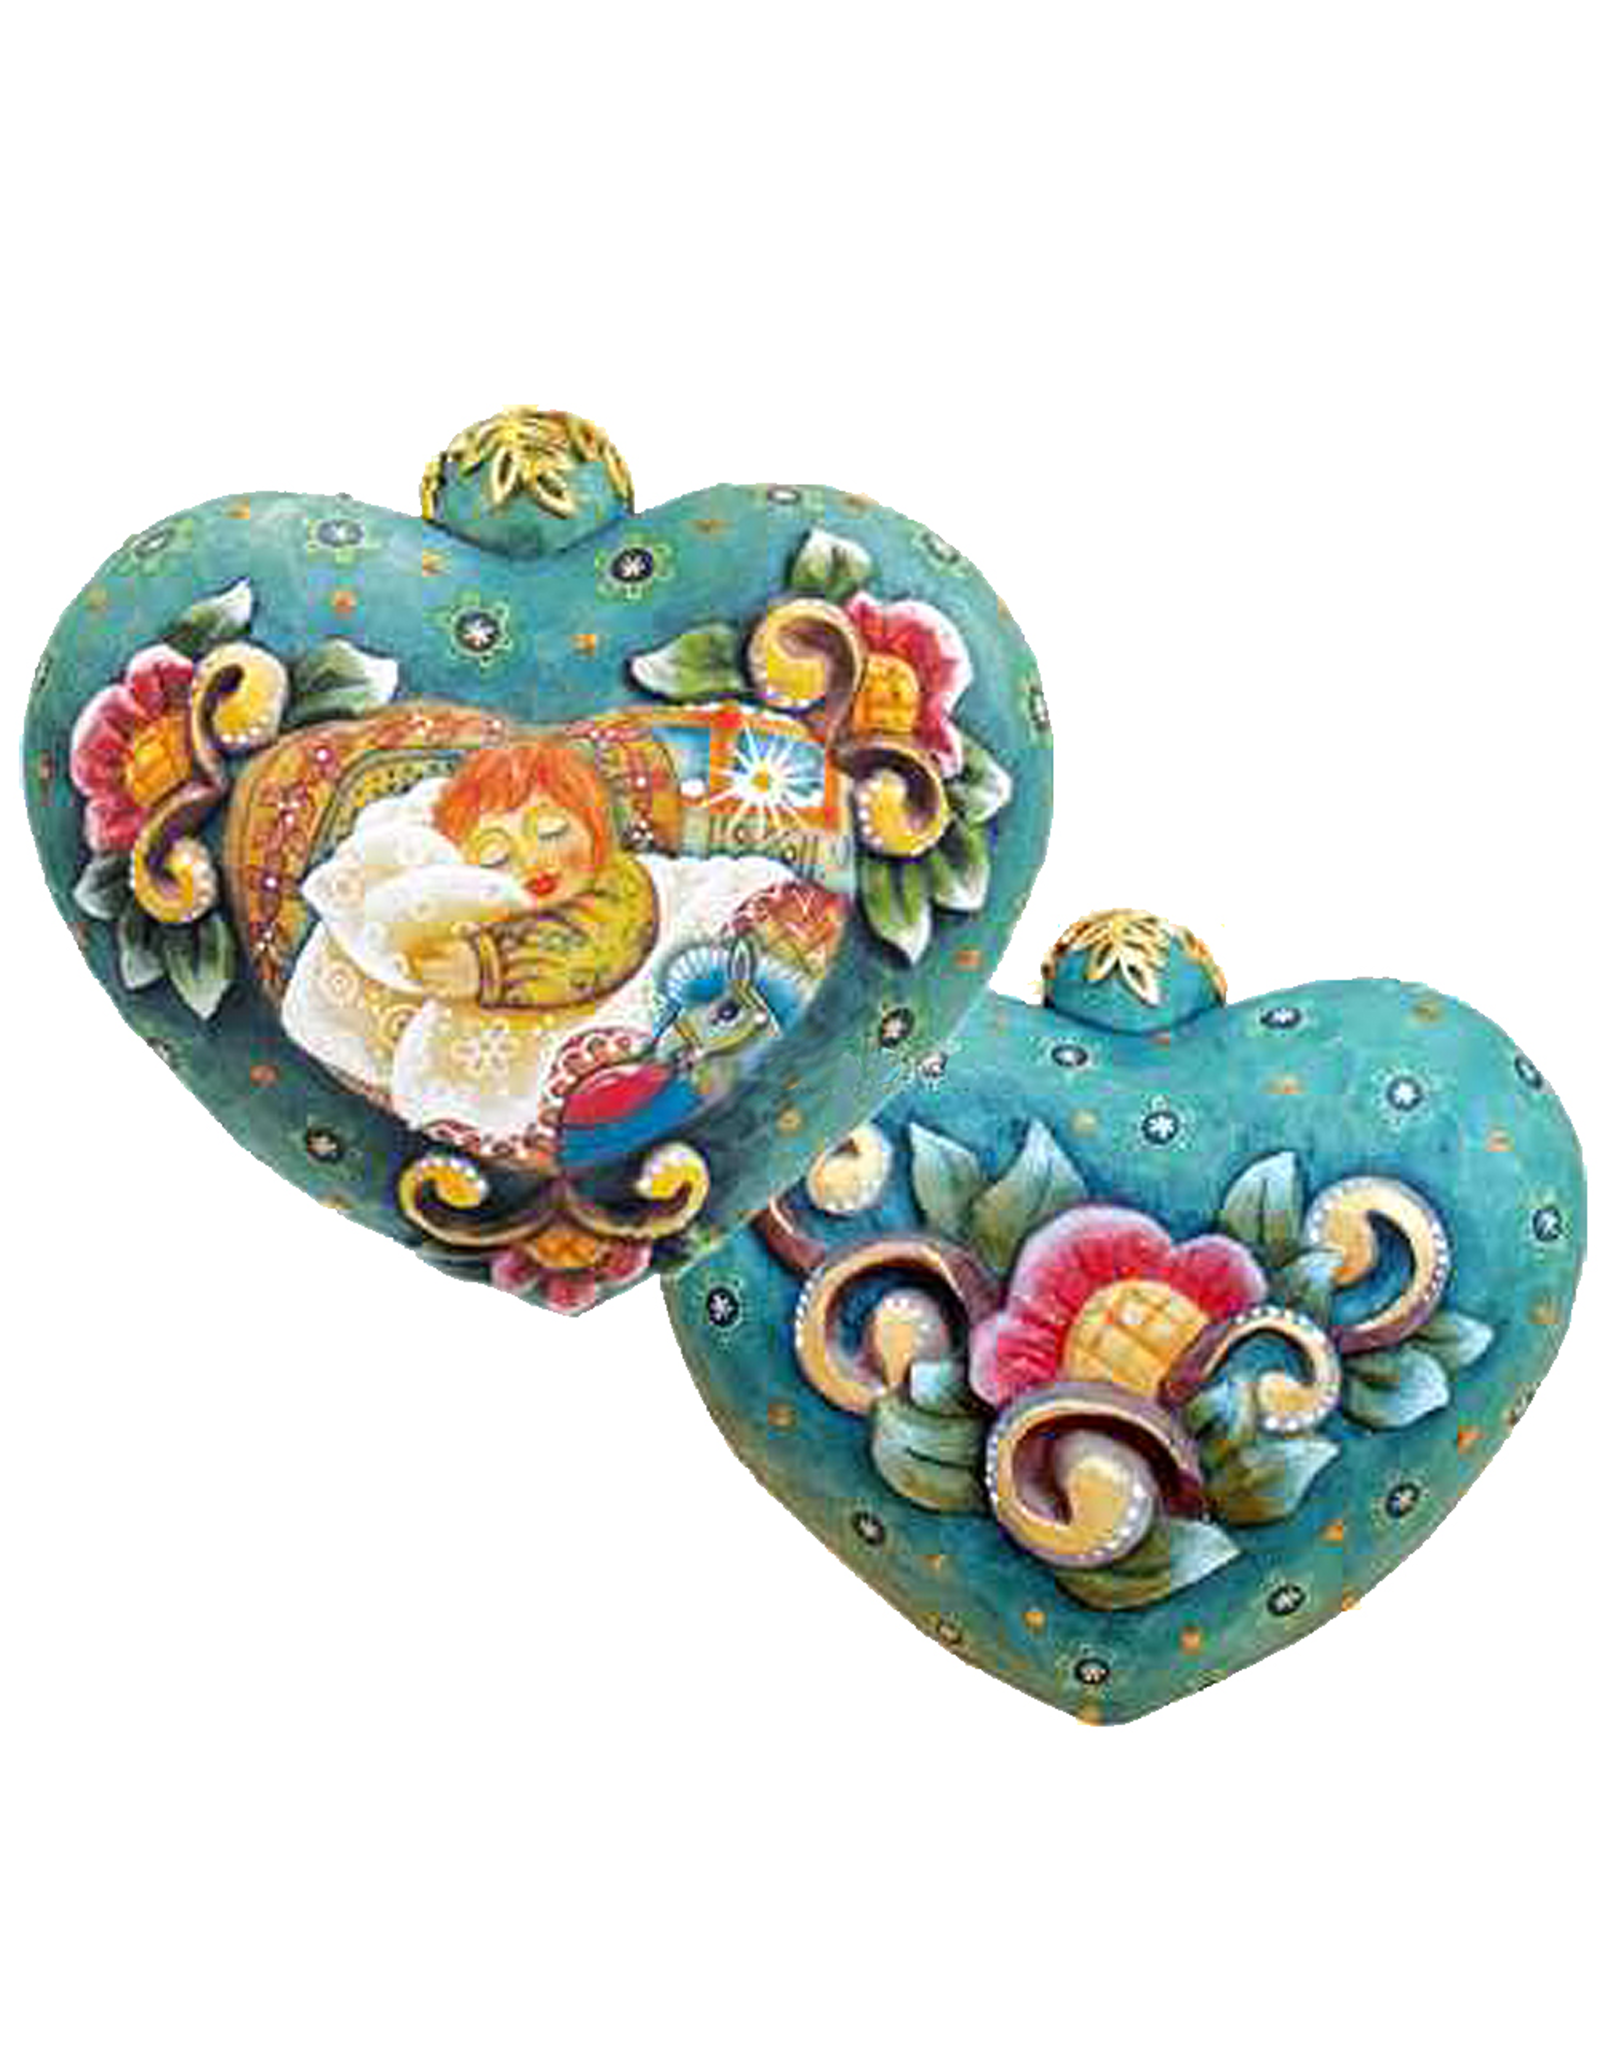 DeBrekht Artistic Studios Sweet Dreams Heart Ornament 4 Inch